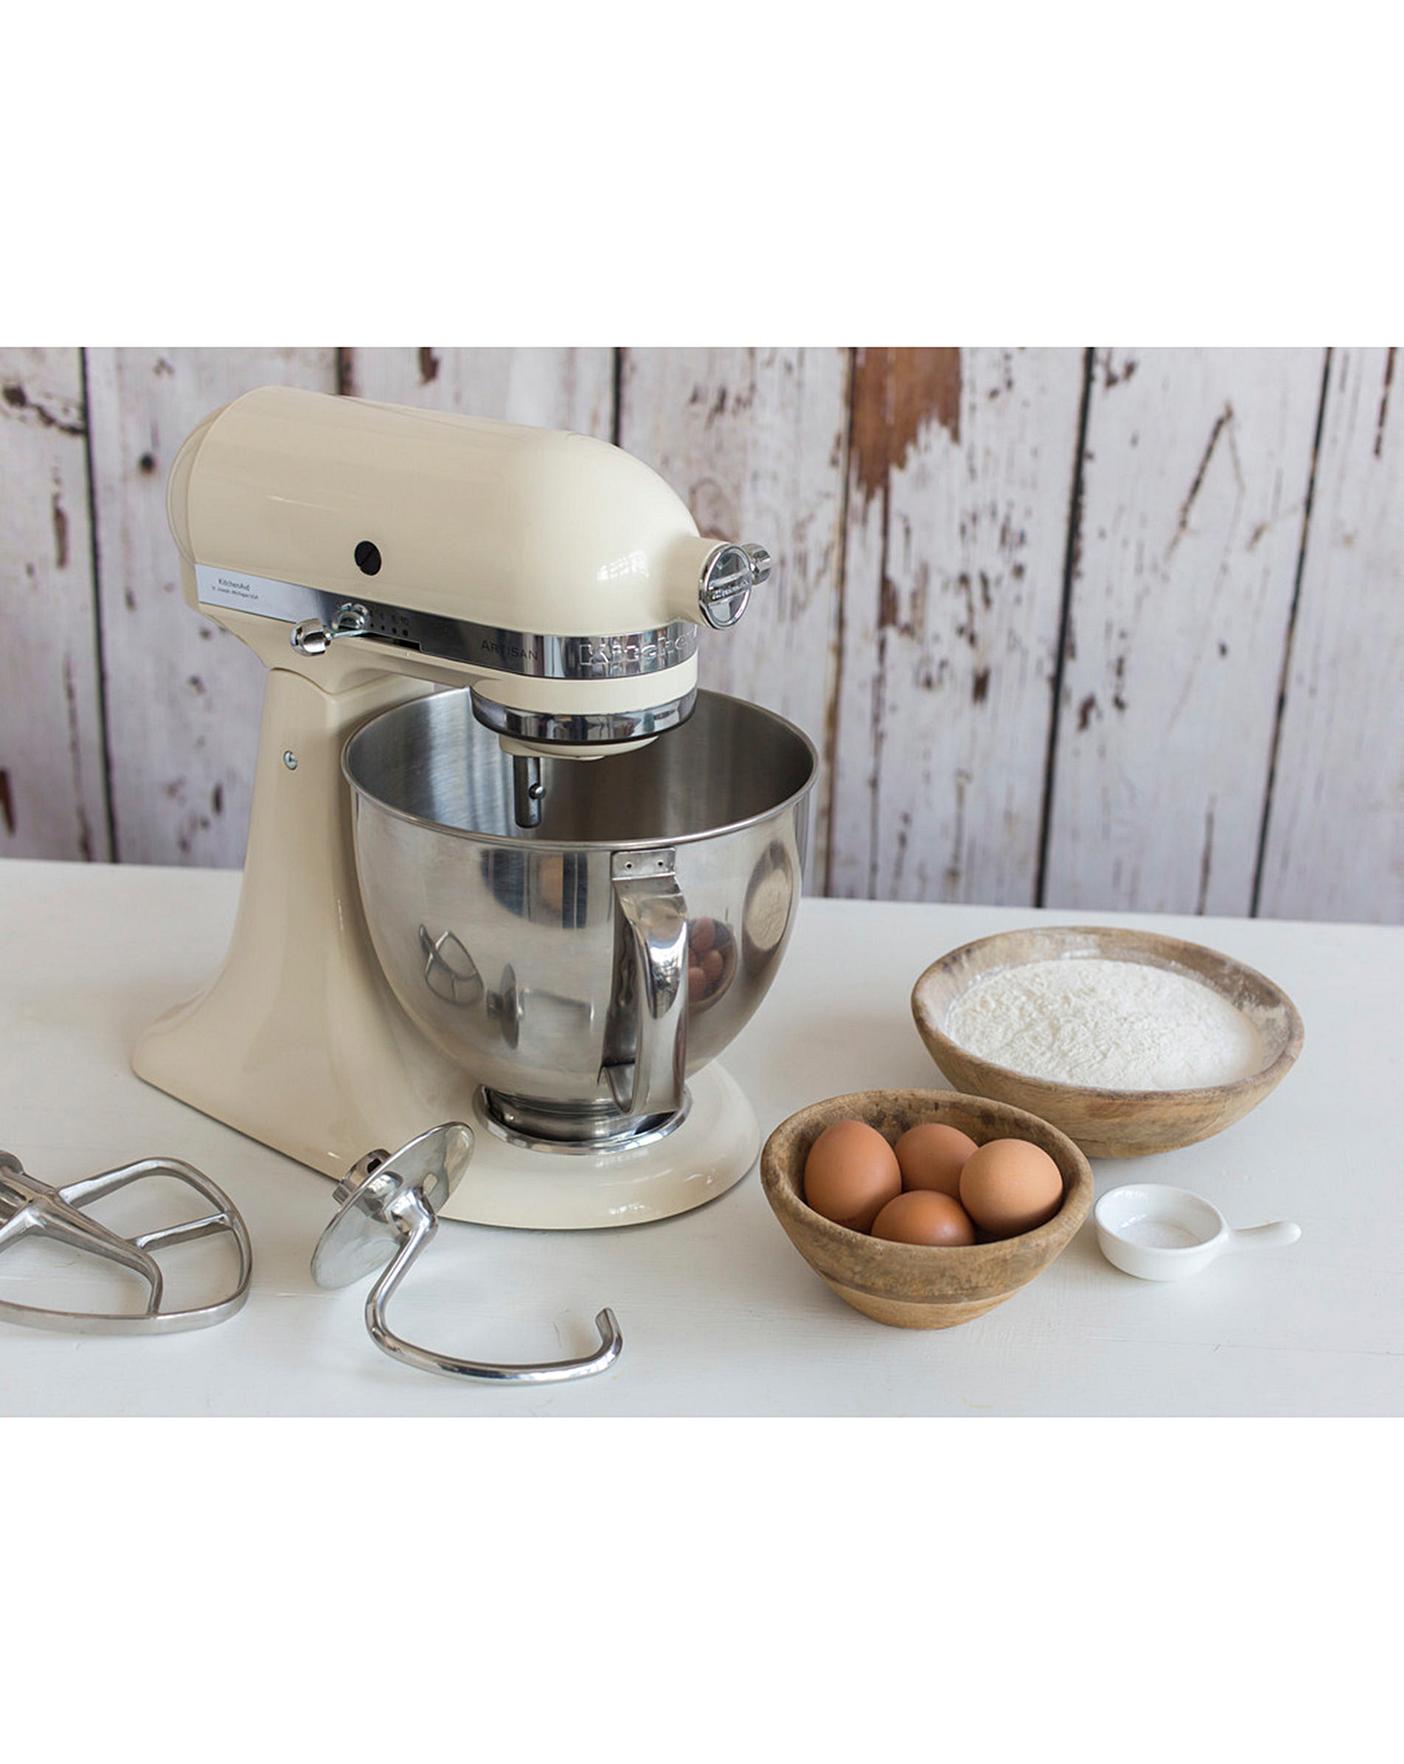 KitchenAid 5KSM7580X Artisan Professionally Designed Almond Cream 7